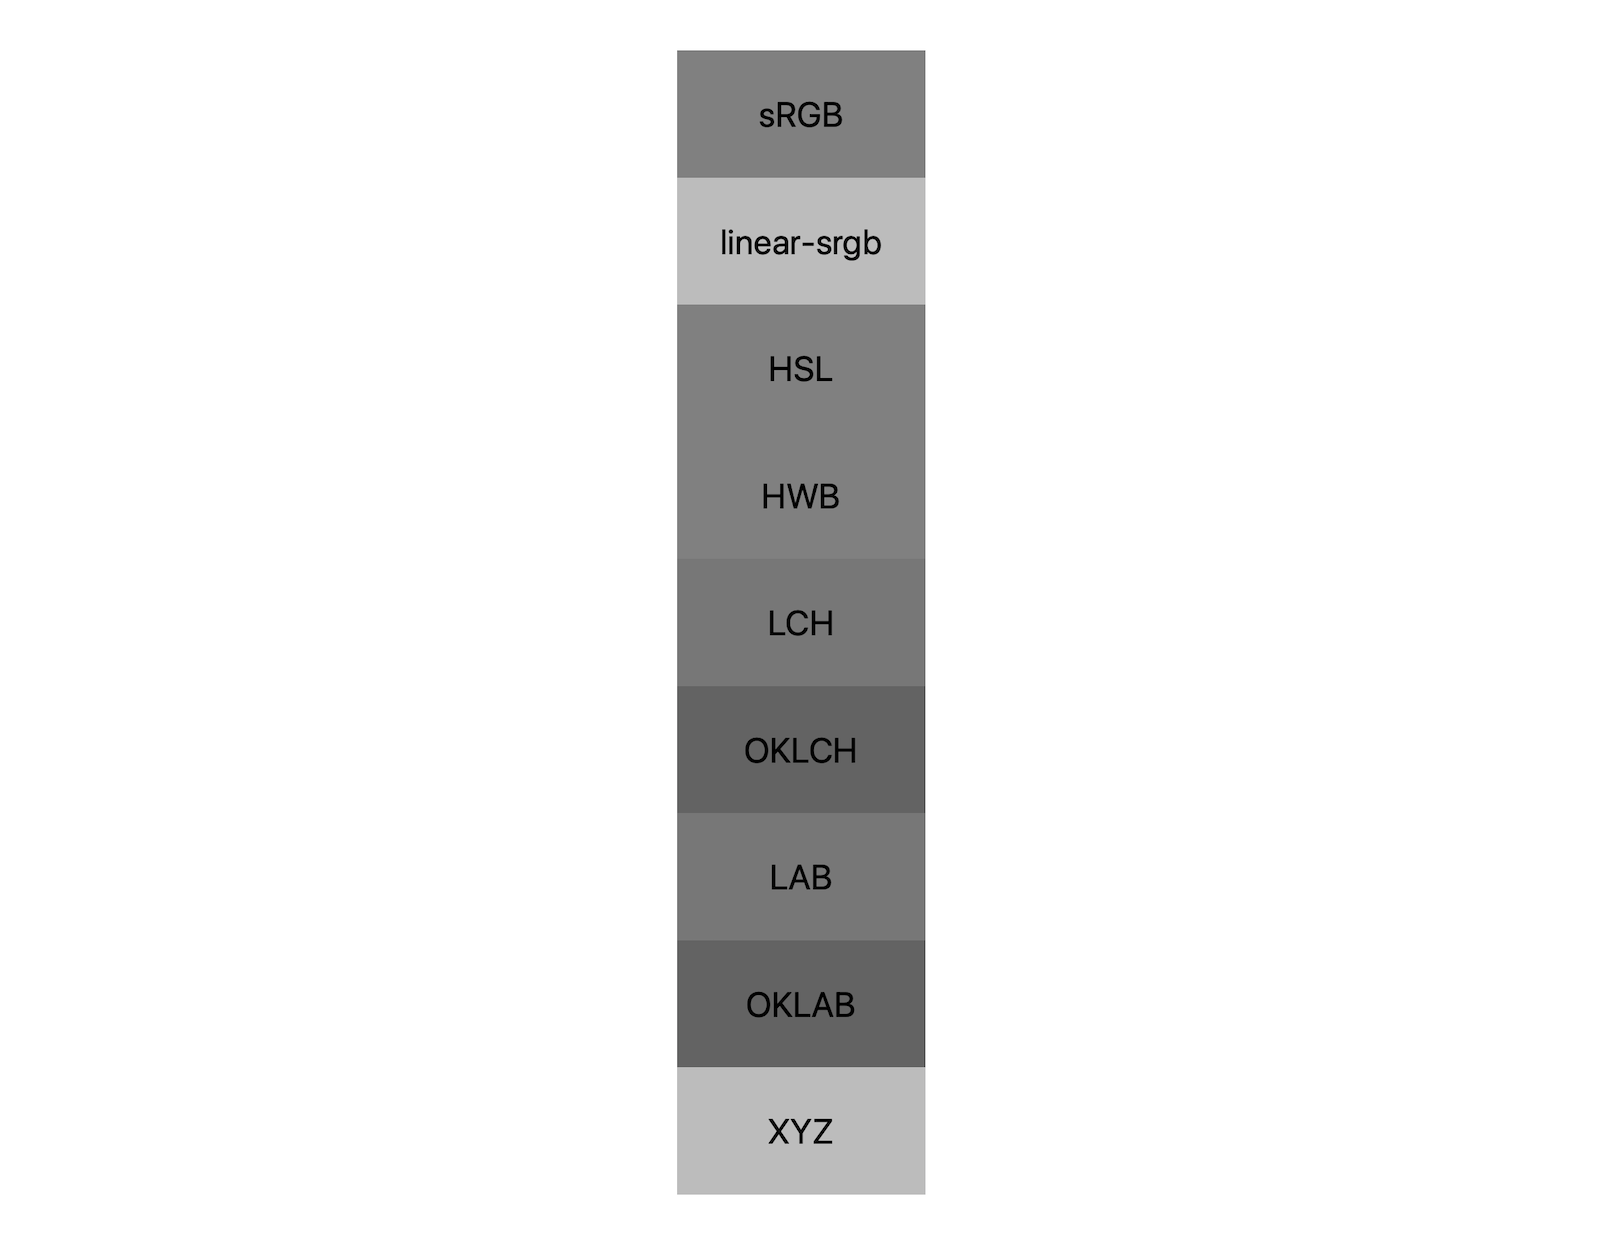 7 ruang warna (sRGB, Linear-SRGB, Lch, Oklch, Lab, Oklab, xyz) masing-masing menunjukkan hasil pencampuran hitam dan putih. Kira-kira 5 nuansa berbeda ditampilkan, menunjukkan bahwa setiap ruang warna bahkan akan bercampur dengan warna abu-abu secara berbeda.